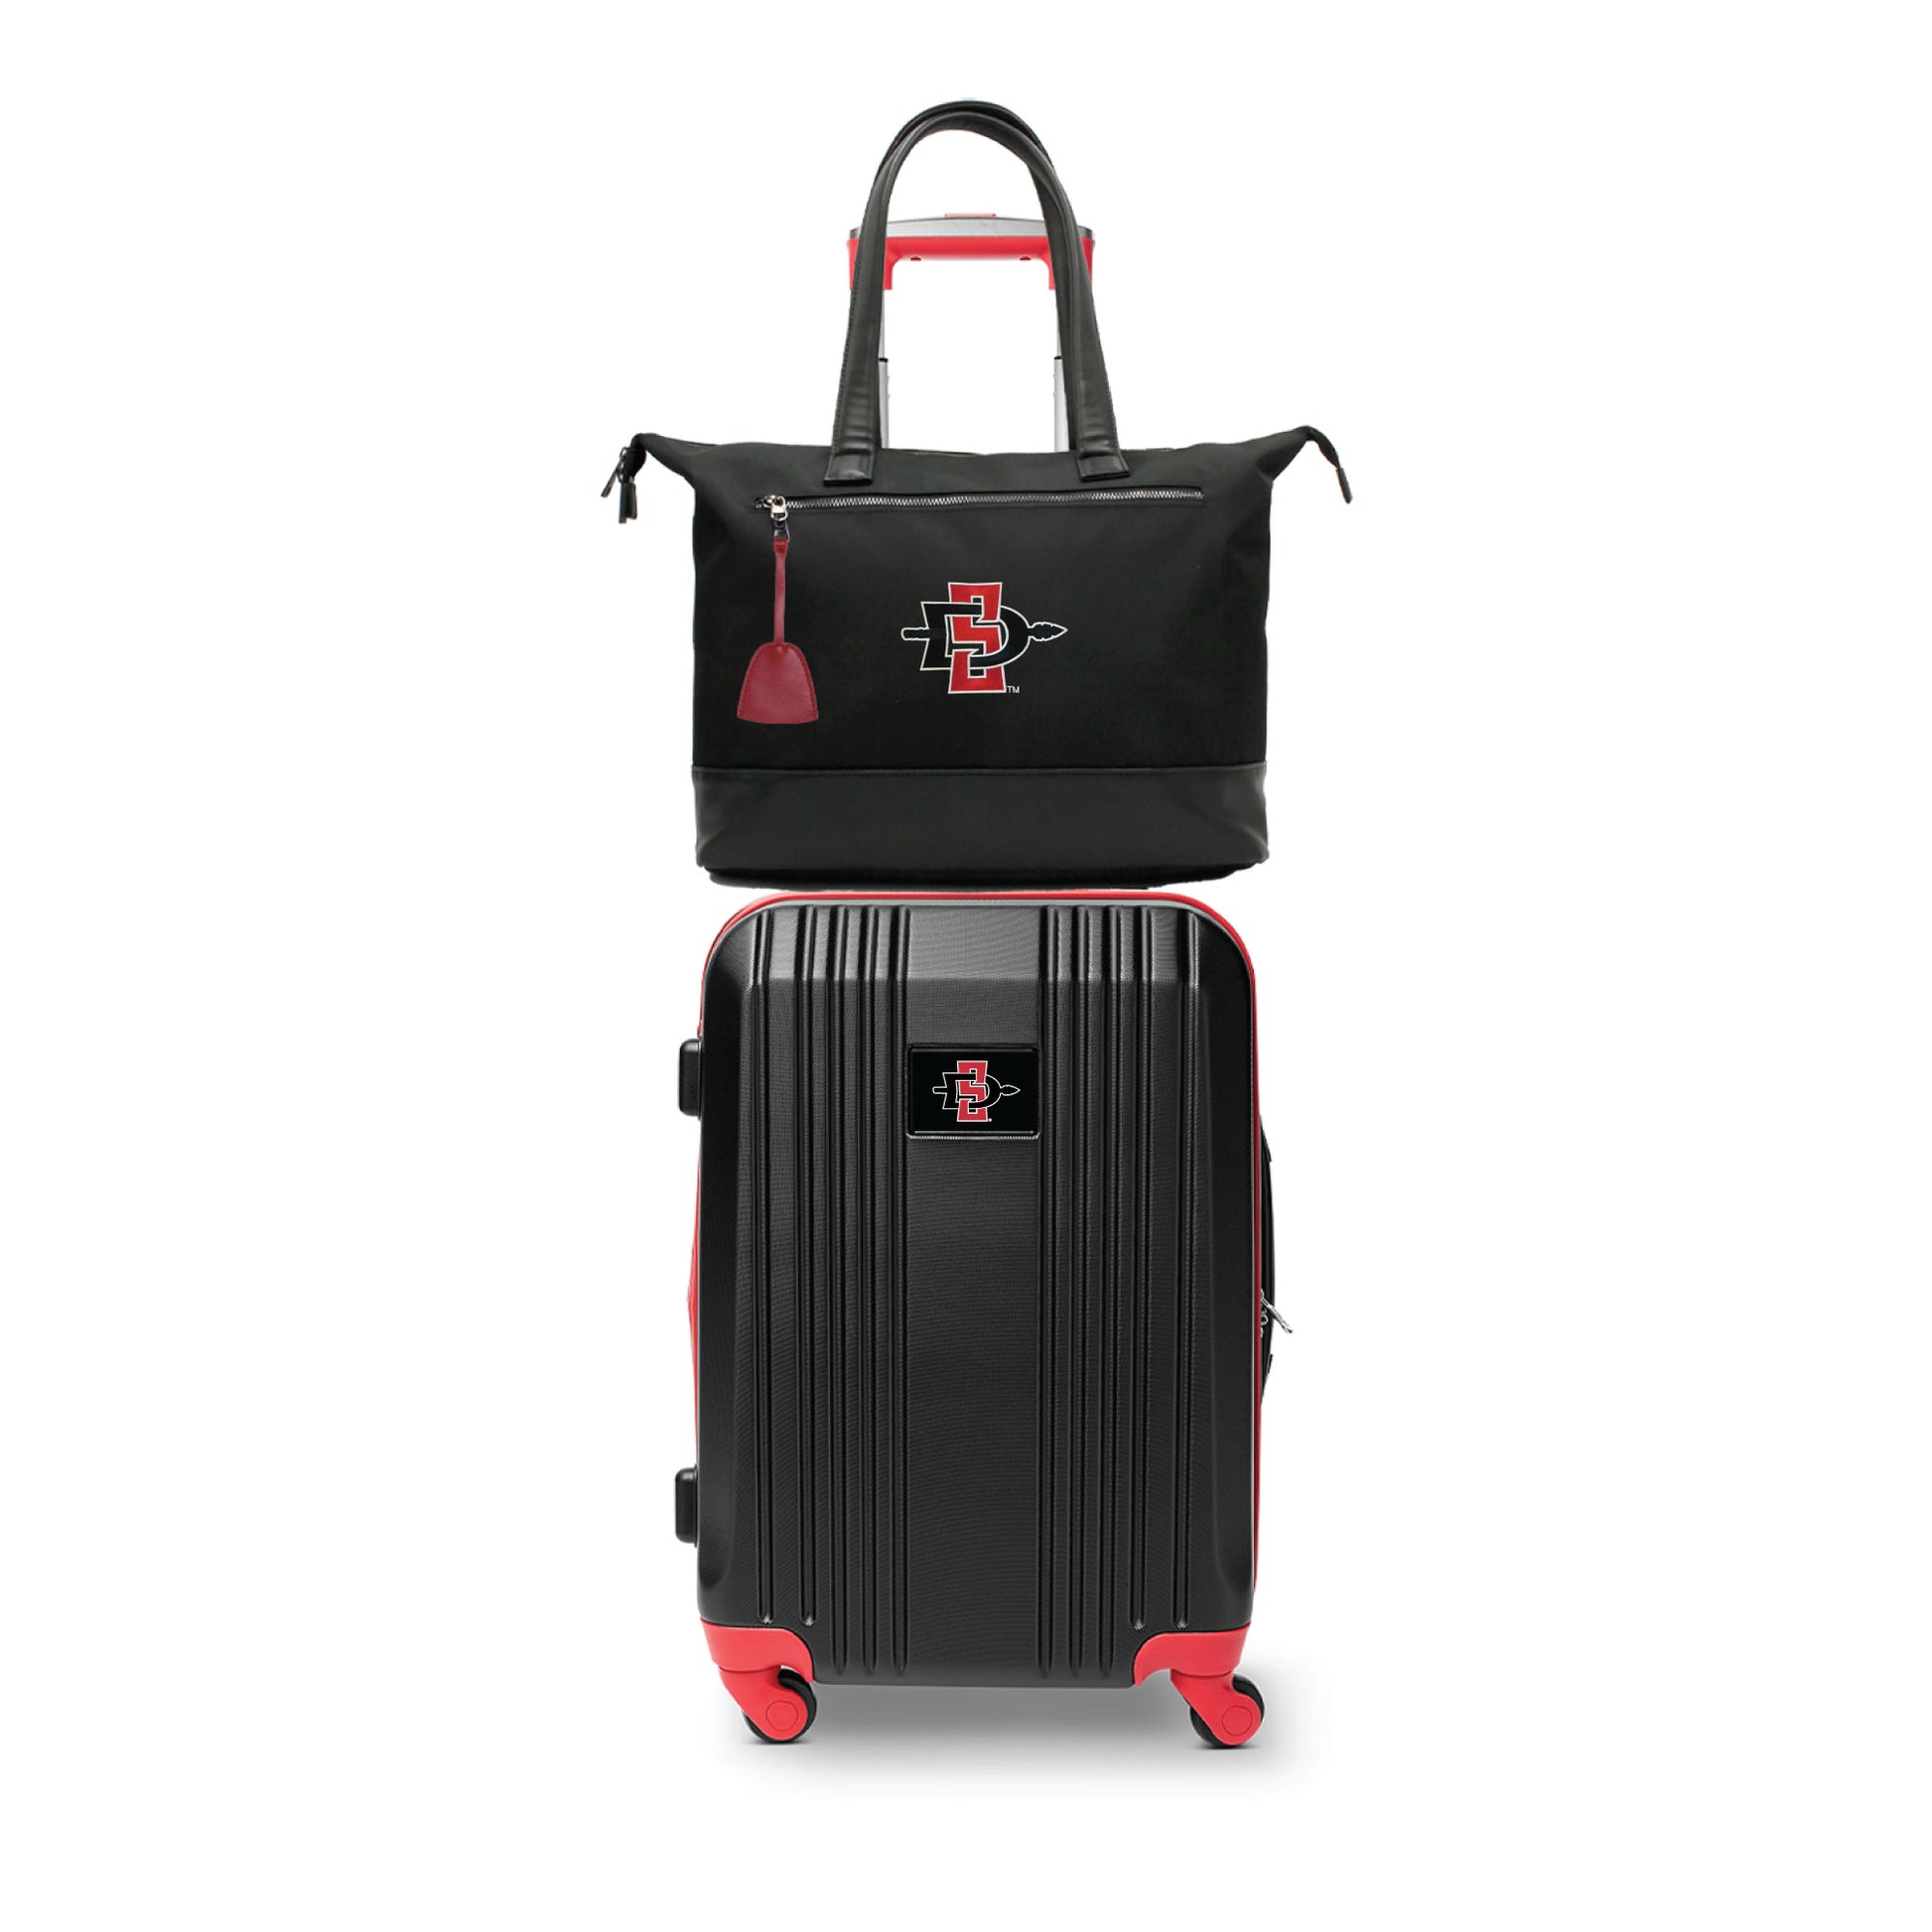 San Diego State Aztecs Premium Laptop Tote Bag and Luggage Set